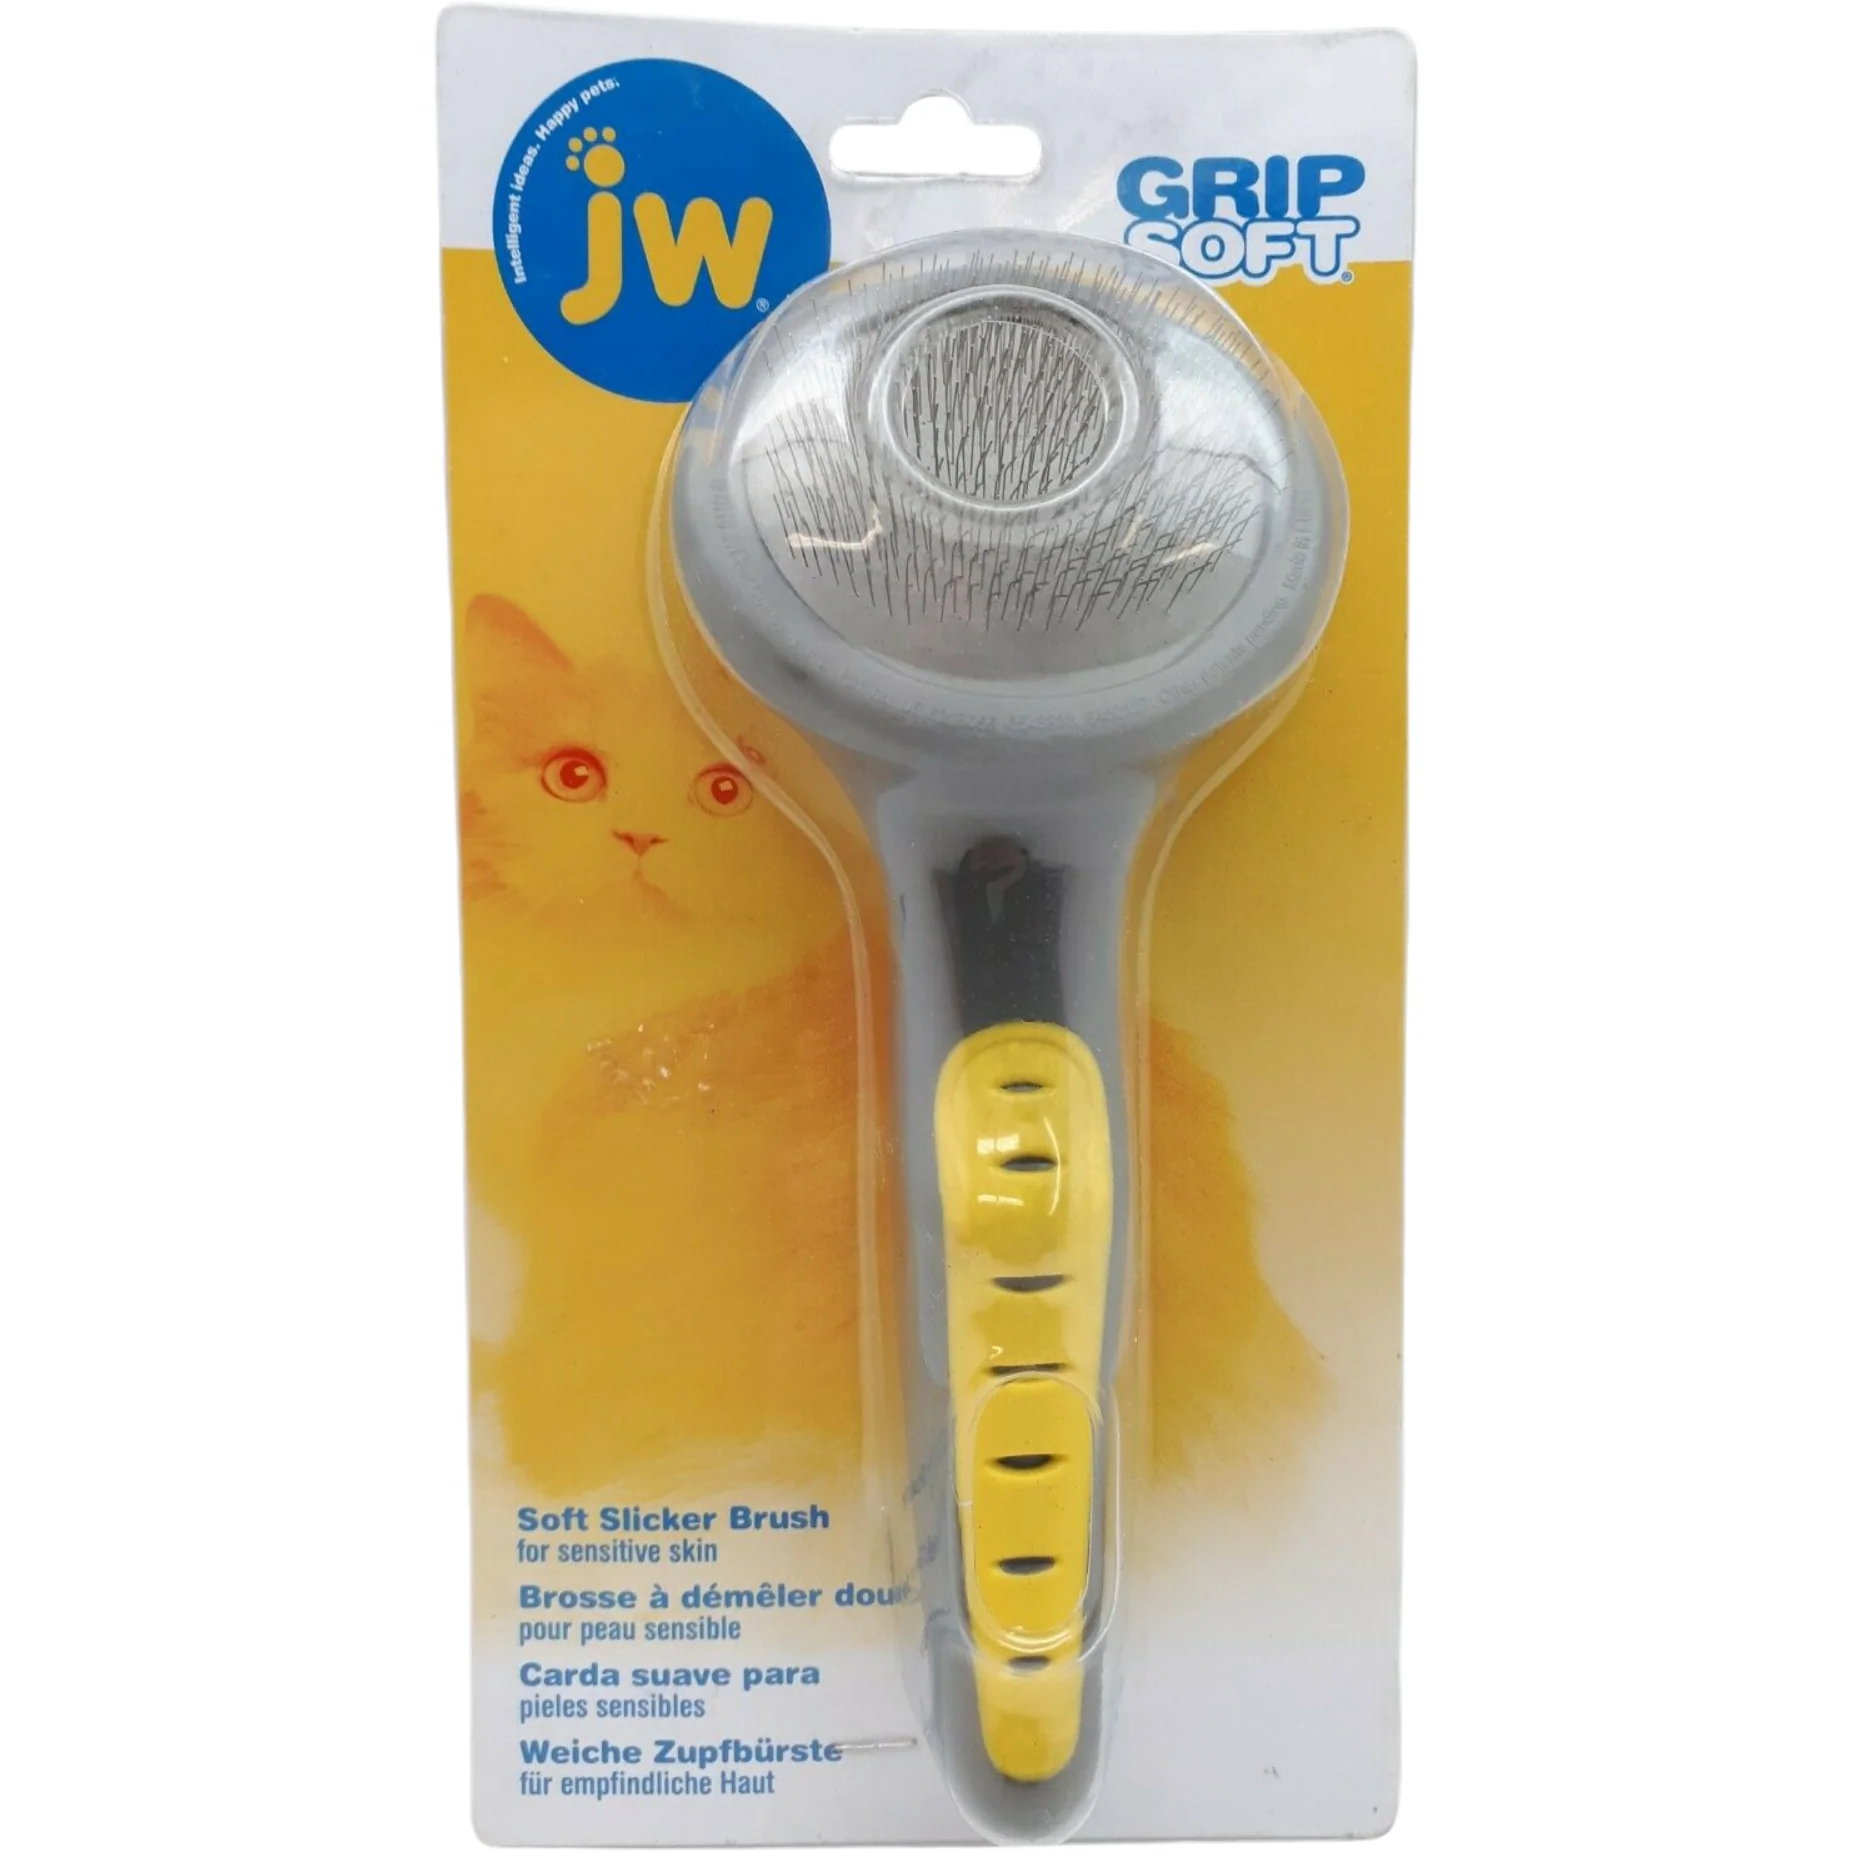 jw Grip Soft Soft Slicker Brush / For Sensitive Skin / Dog Grooming Tool / Stainless Steel